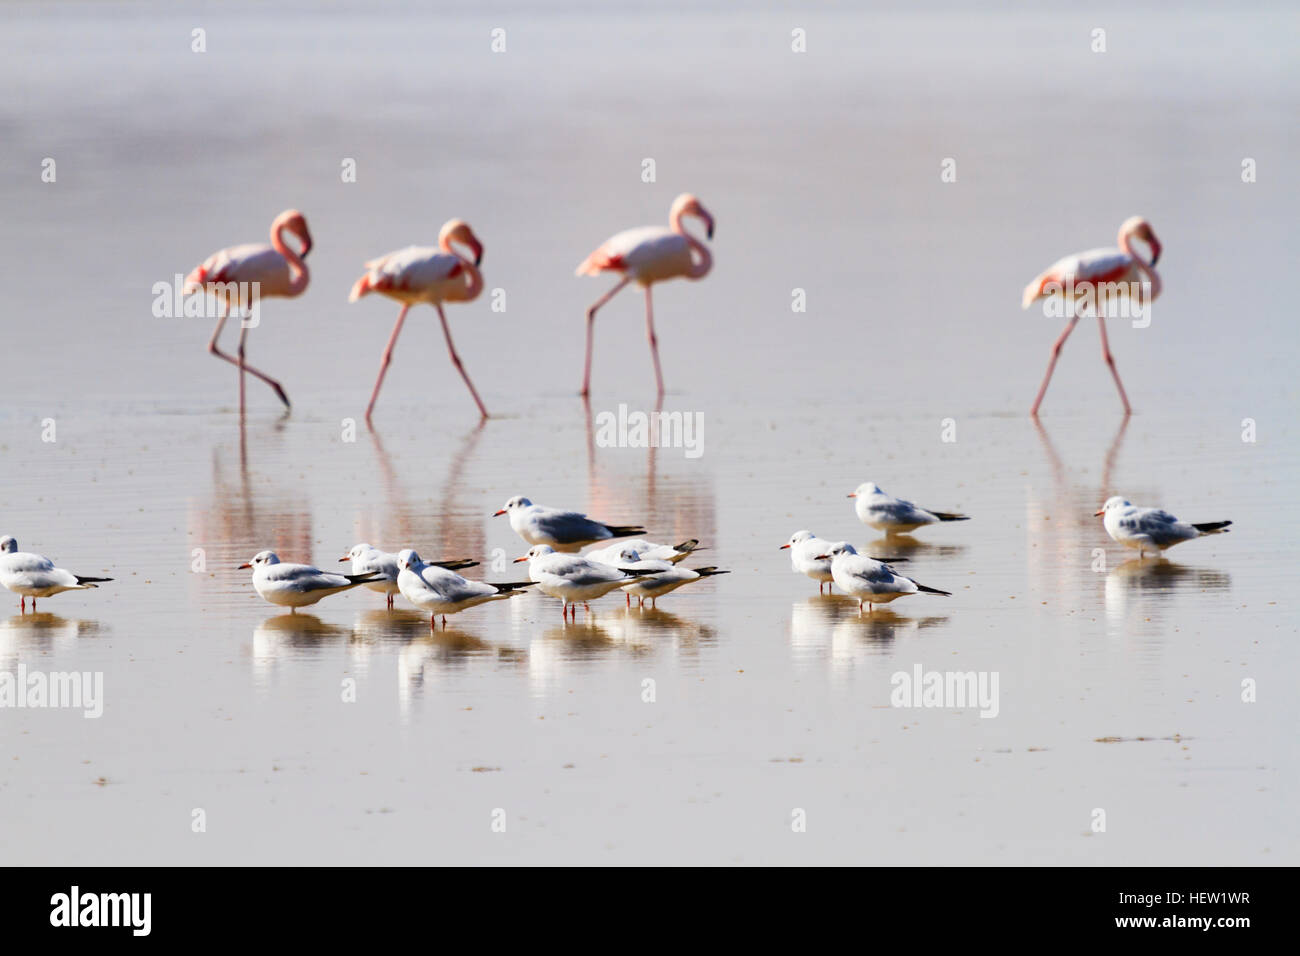 Annual flamingo migration to Larnaca Salt Lake, Cyprus.With Black headed gulls Stock Photo